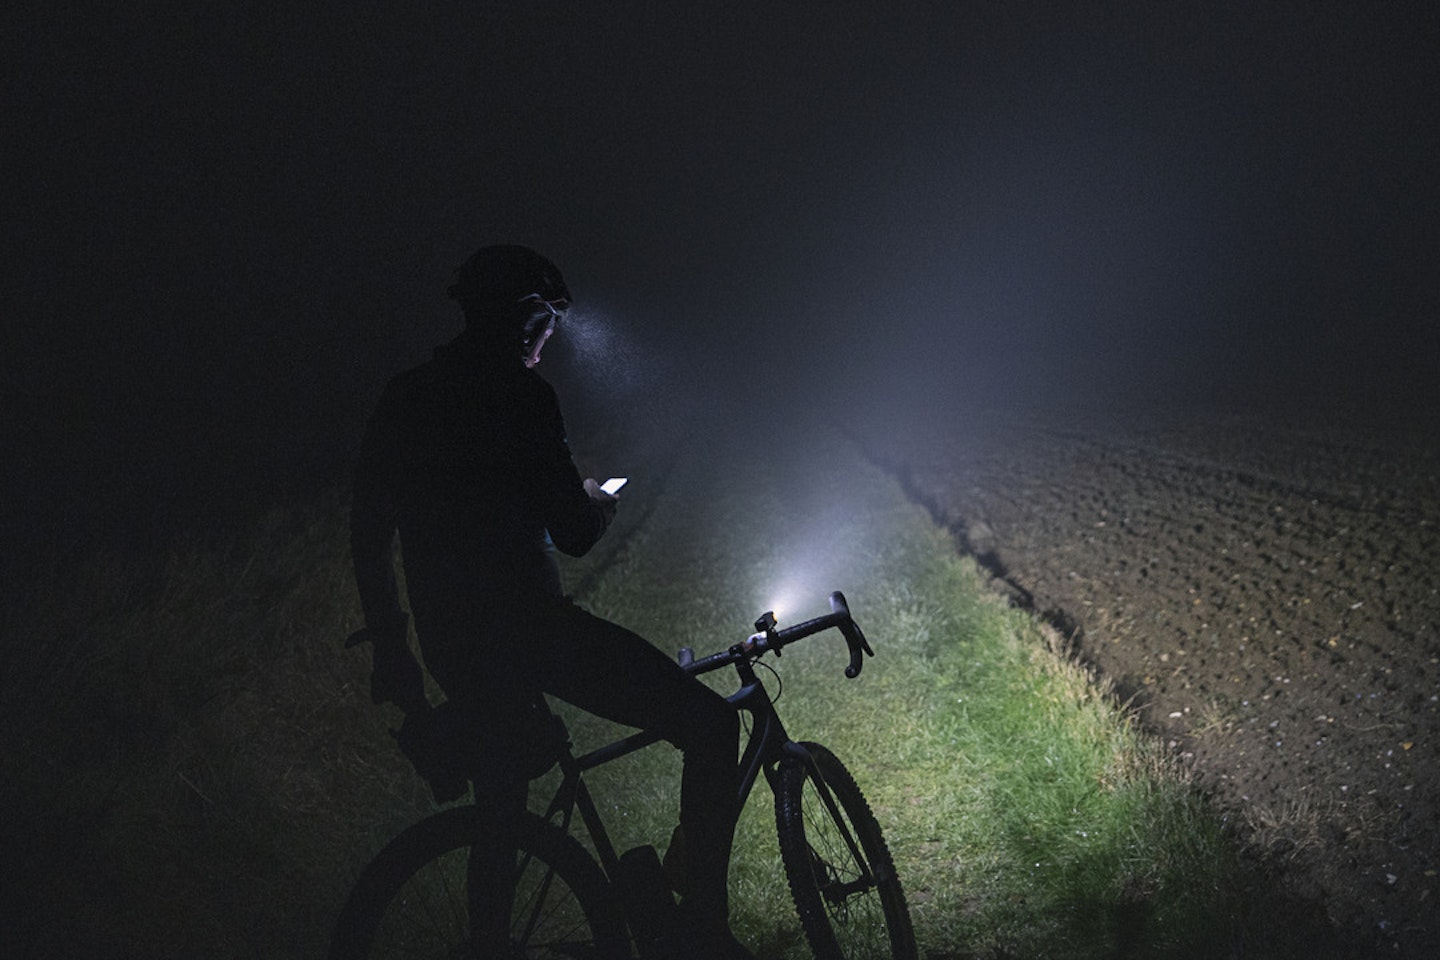 bike lights at night